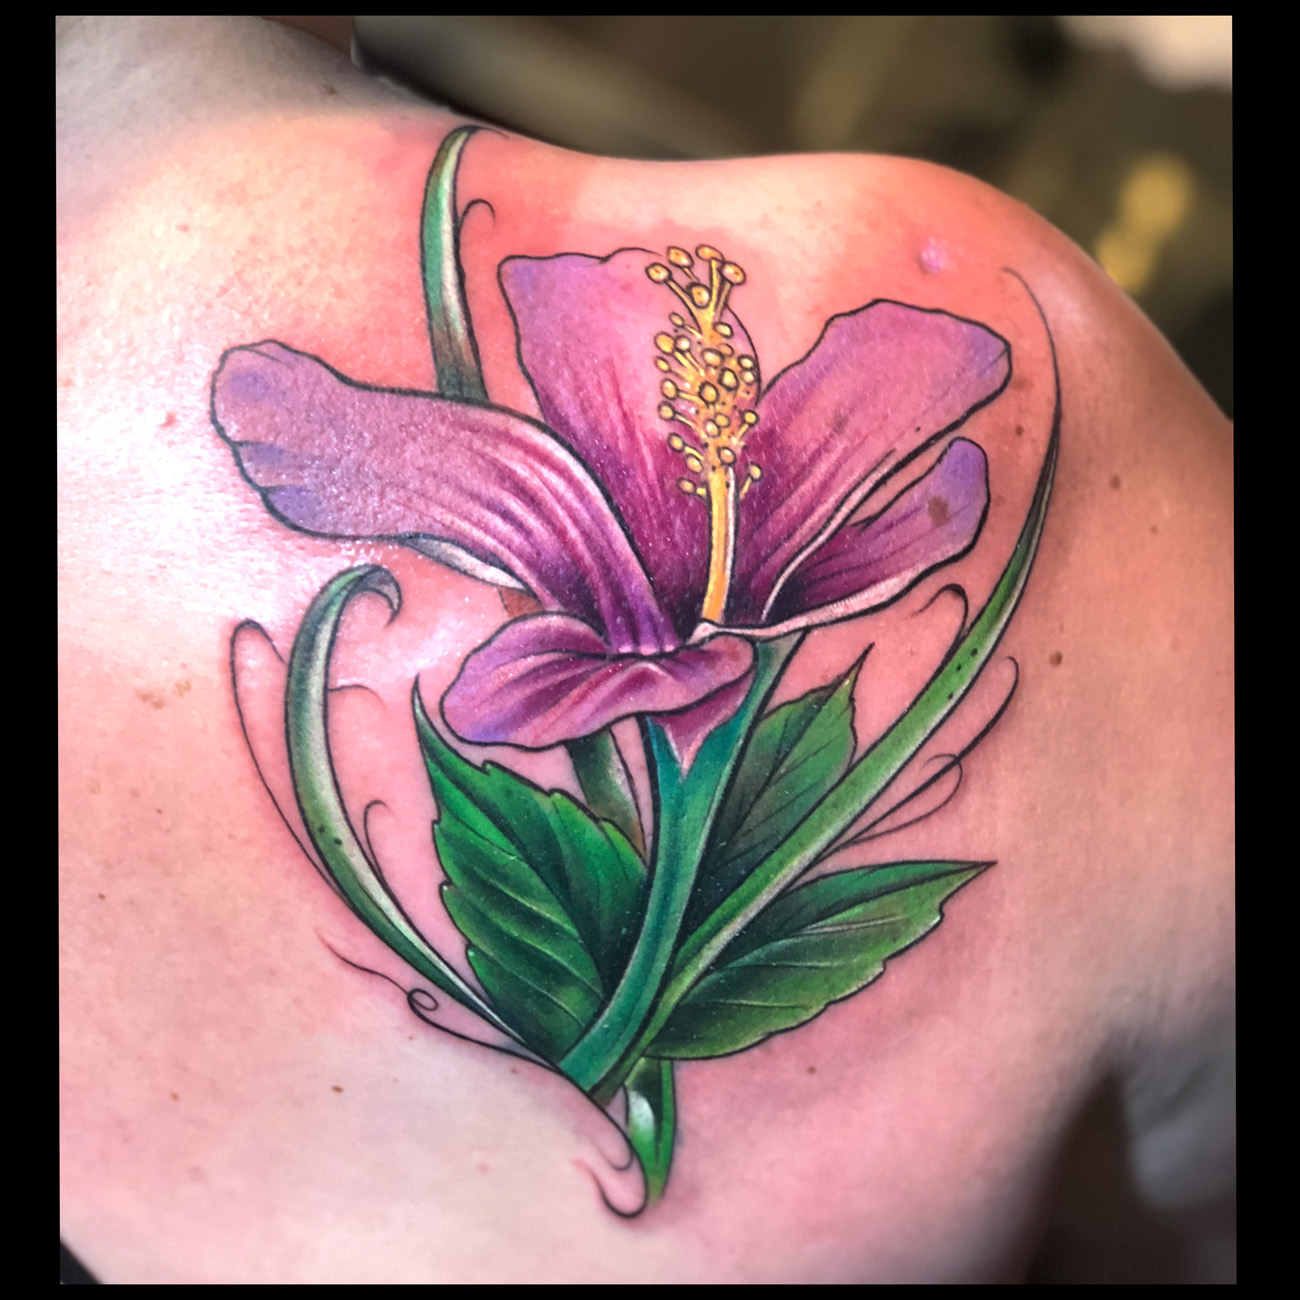 Mohawk Tattoo Studio  Lily flowers tattoo coverup done last week   Facebook